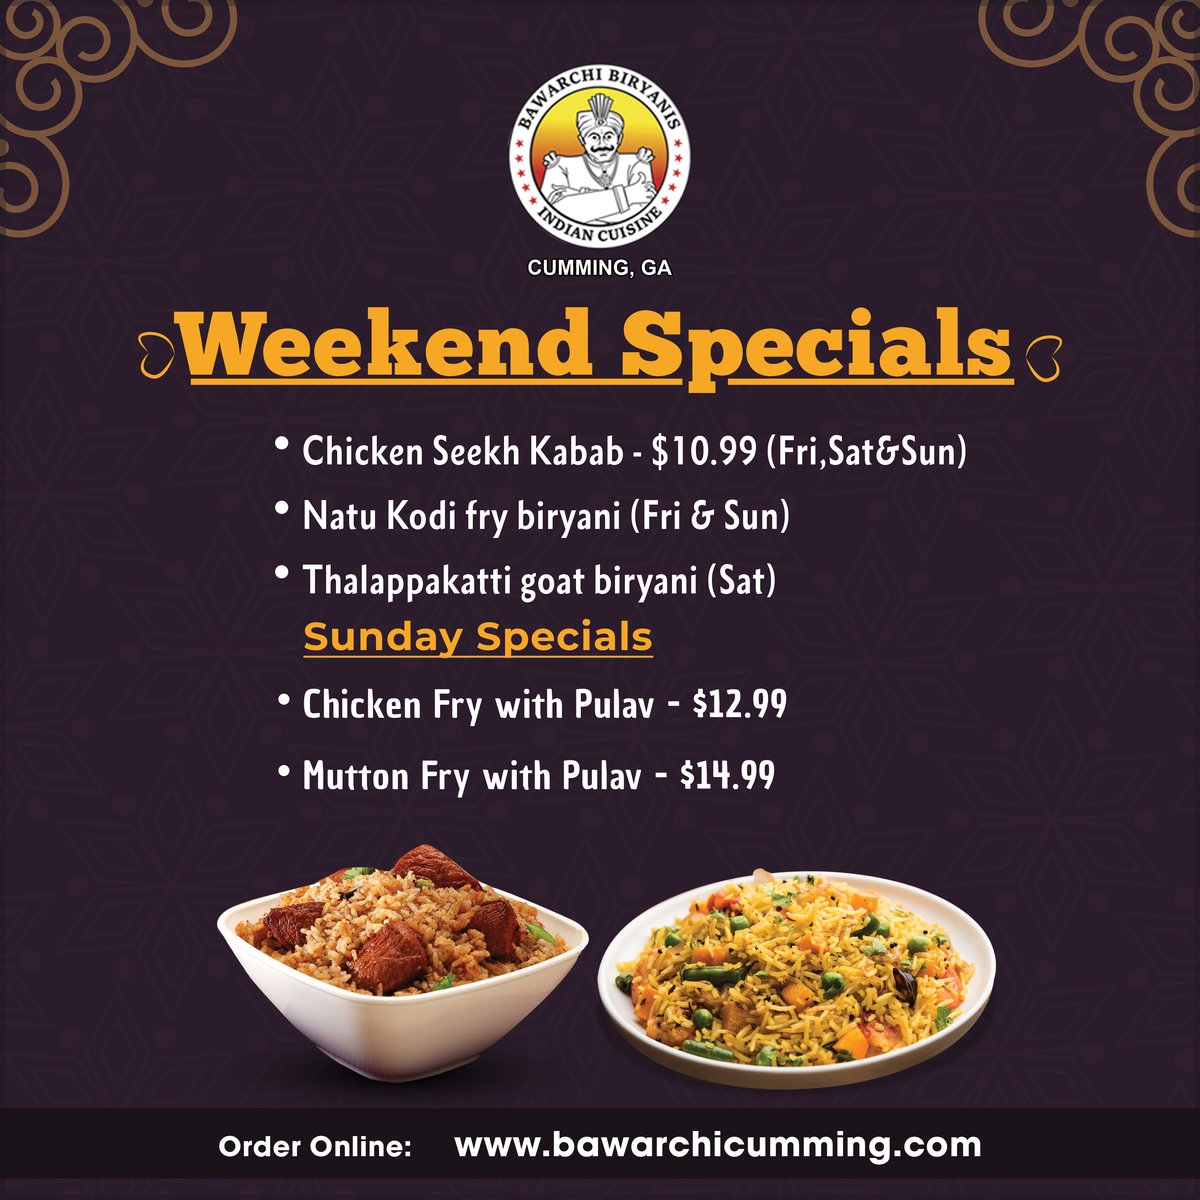 Weekend specials !!
Chicken Seekh Kabab - $10.99 (Fri,Sat&Sun)
Natu Kodi fry biryani (Fri & Sun)
Thalappakatti goat biryani (Sat)
Sunday Specials!
Chicken Fry with Pulav - $12.99
Mutton Fry with Pulav - $14.99
Order Online:bawarchicumming.com/Menu
#BawarchiCumming #BawarchiBiryani